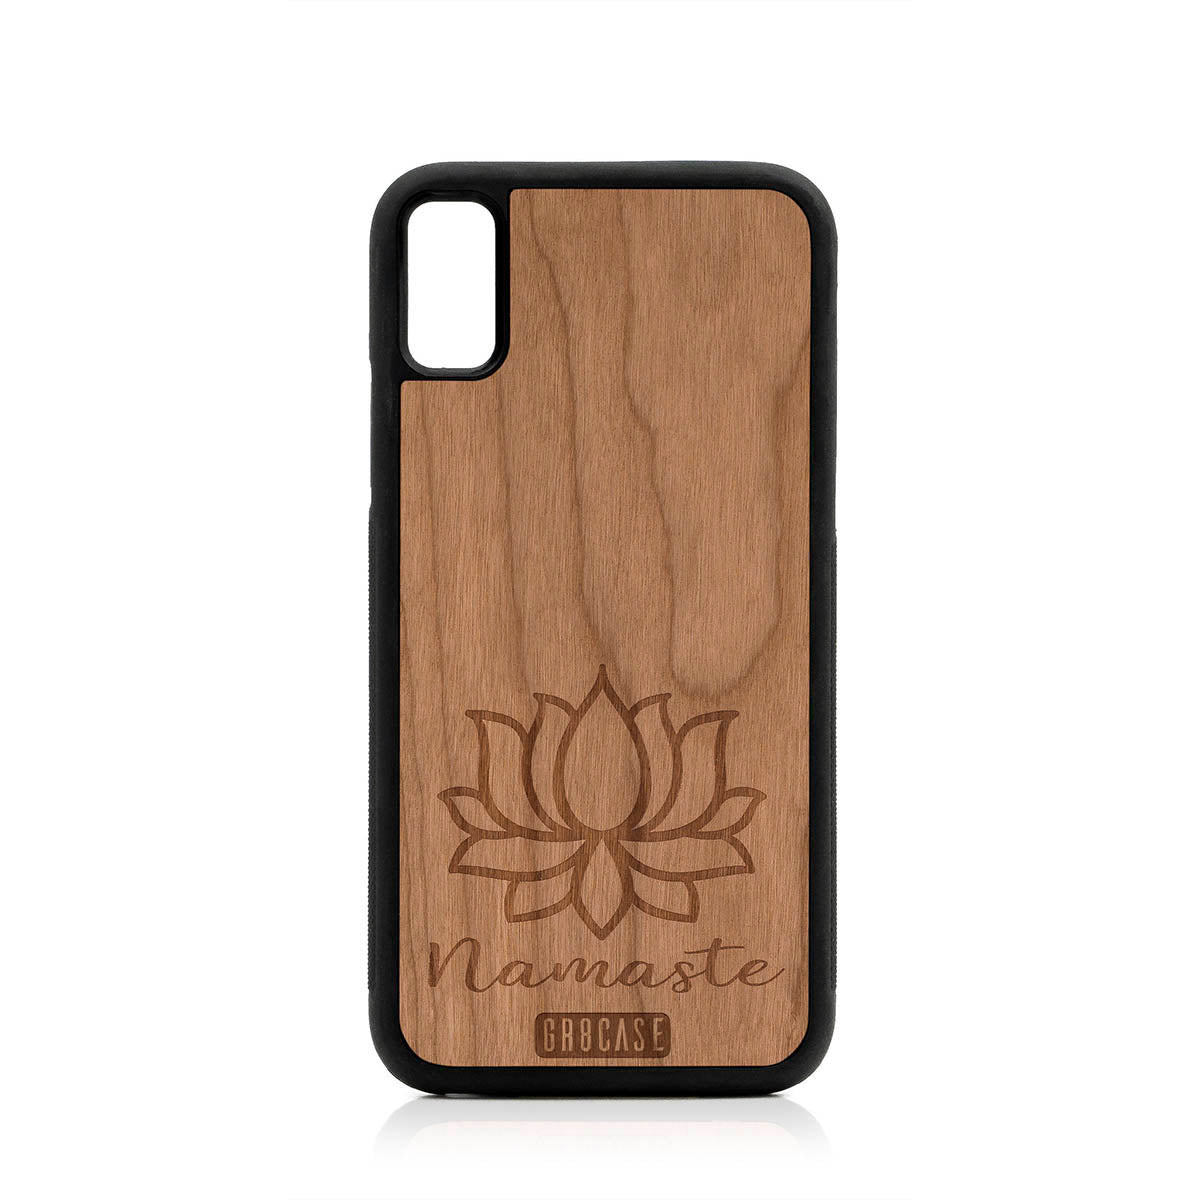 Namaste (Lotus Flower) Design Wood Case For iPhone XR